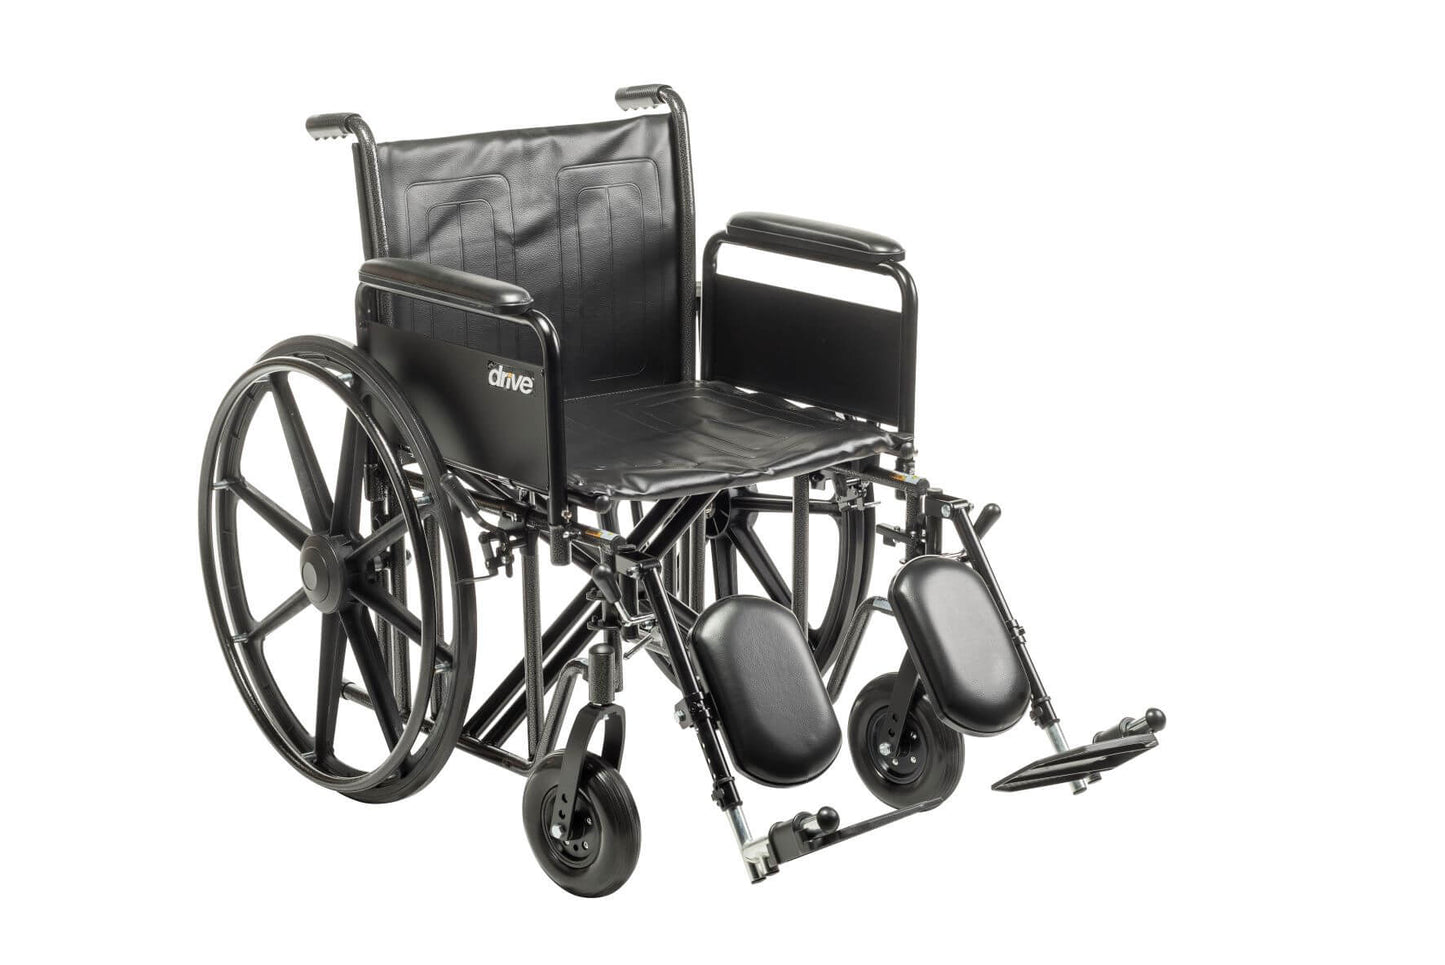 Bariatric Sentra EC Heavy Duty Wheelchair